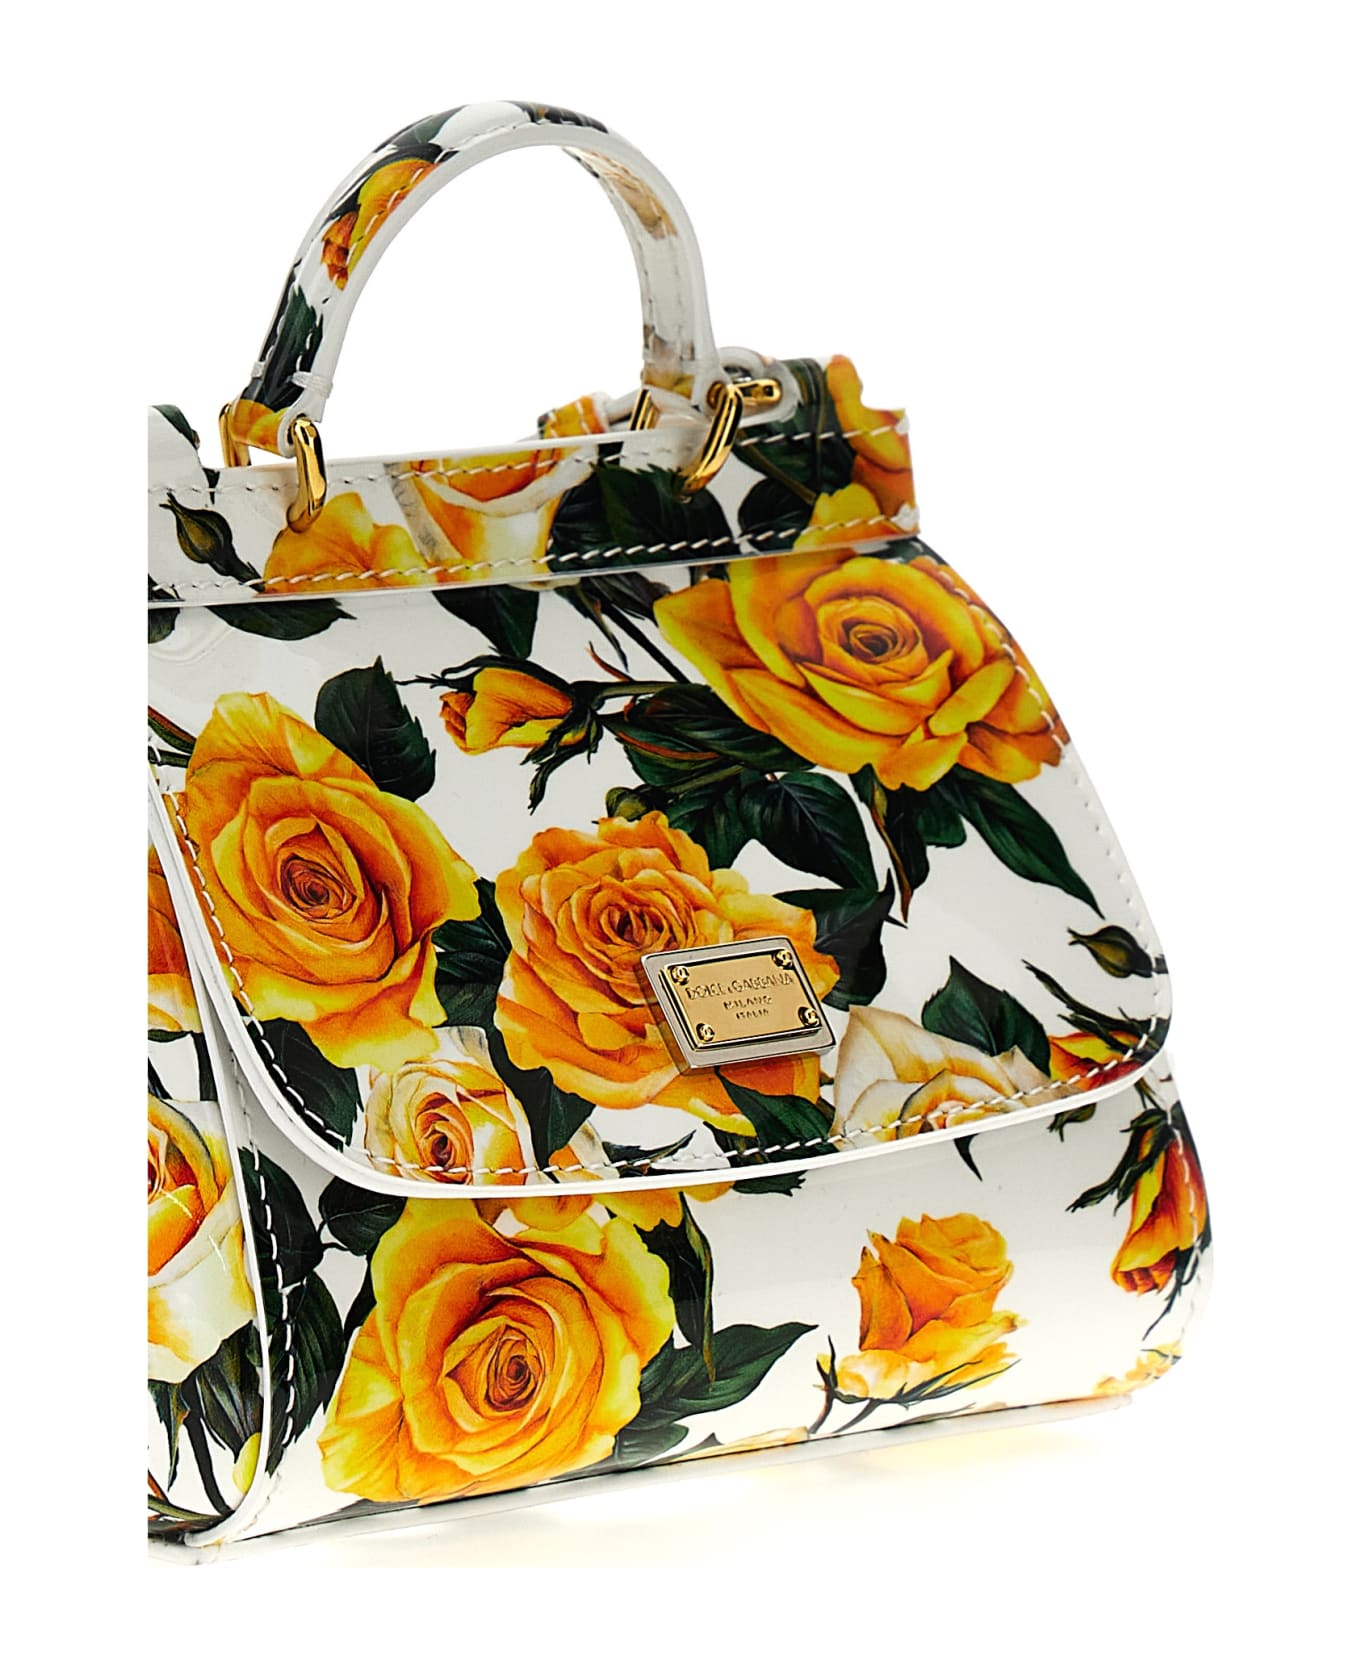 Dolce & Gabbana 'sicily' Mini Handbag - MULTICOLOR